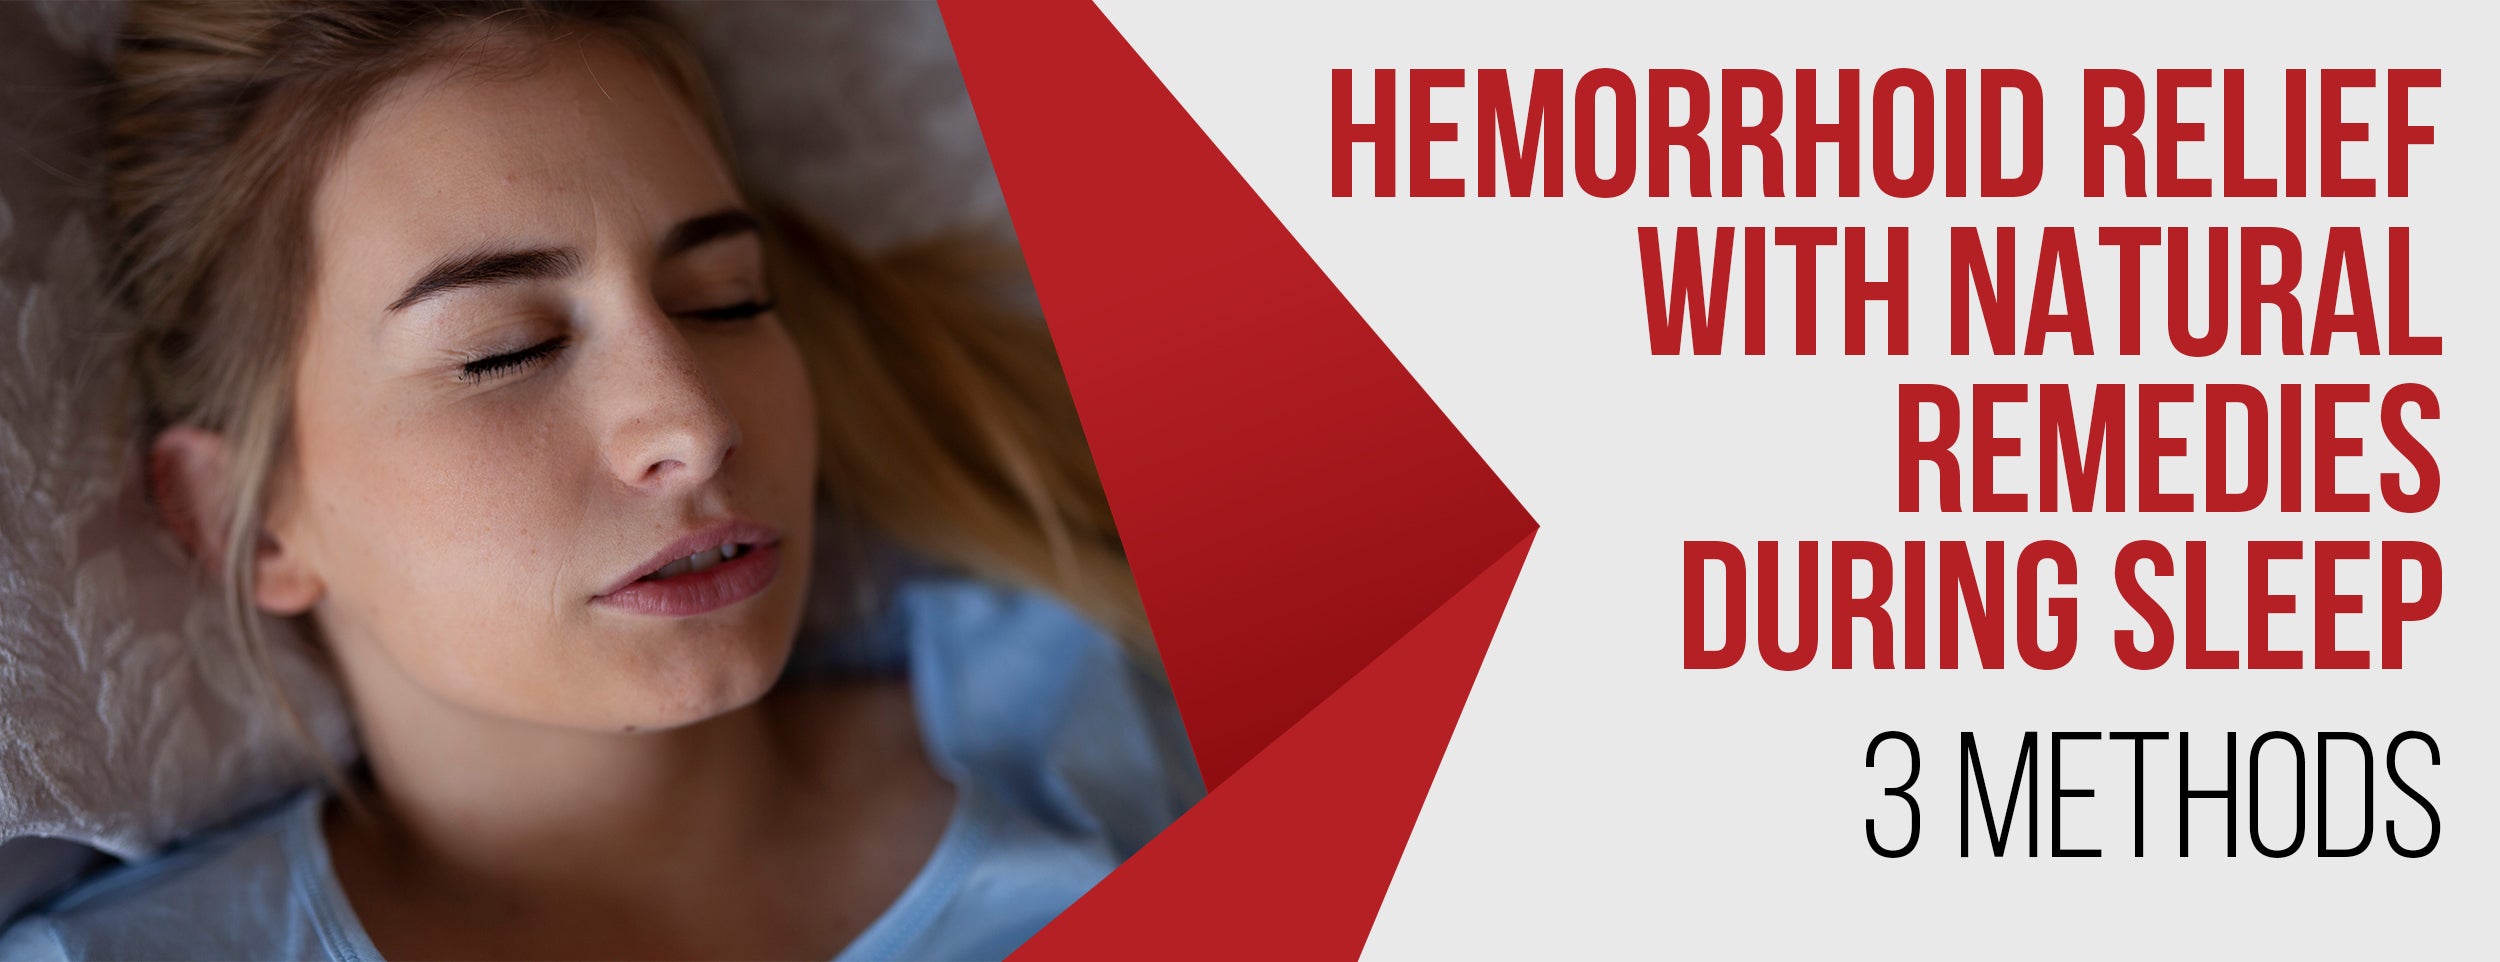 Hemorrhoid Relief With Natural Remedies During Sleep: 3 Methods